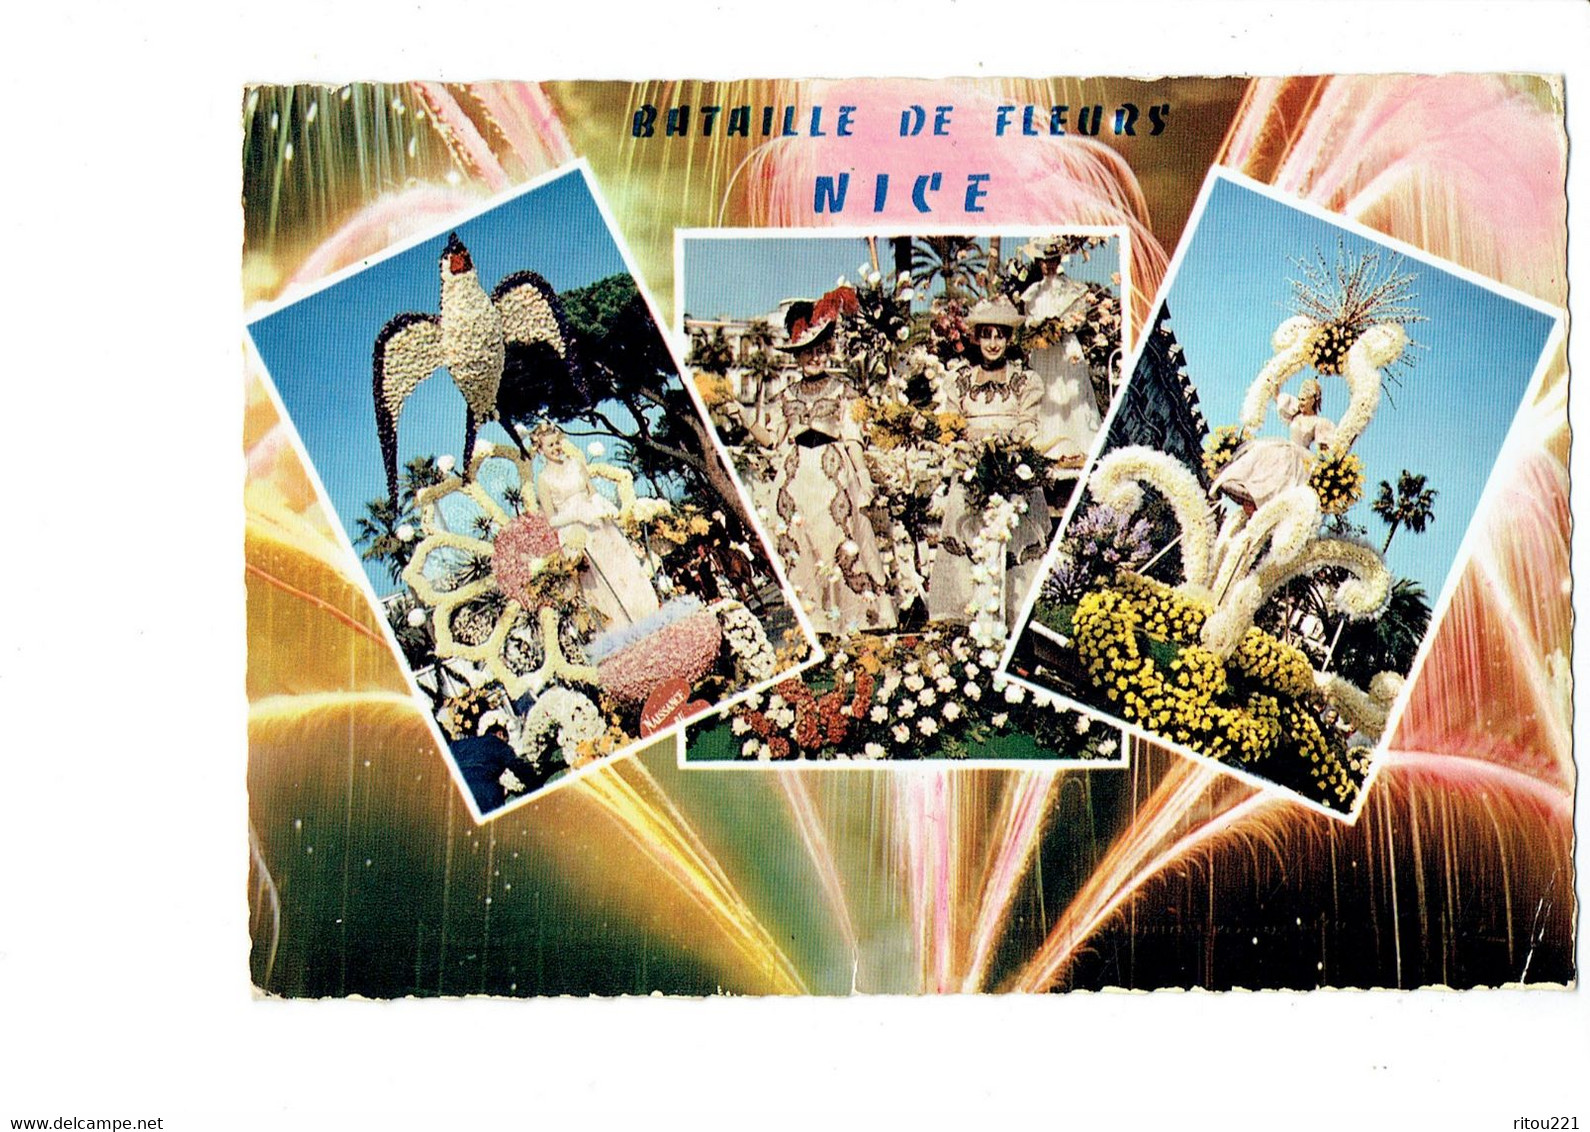 Cpm - NICE - Bataille De Fleurs - Feu D'artifice - Char Femme Coq - 1968 - - Carnaval